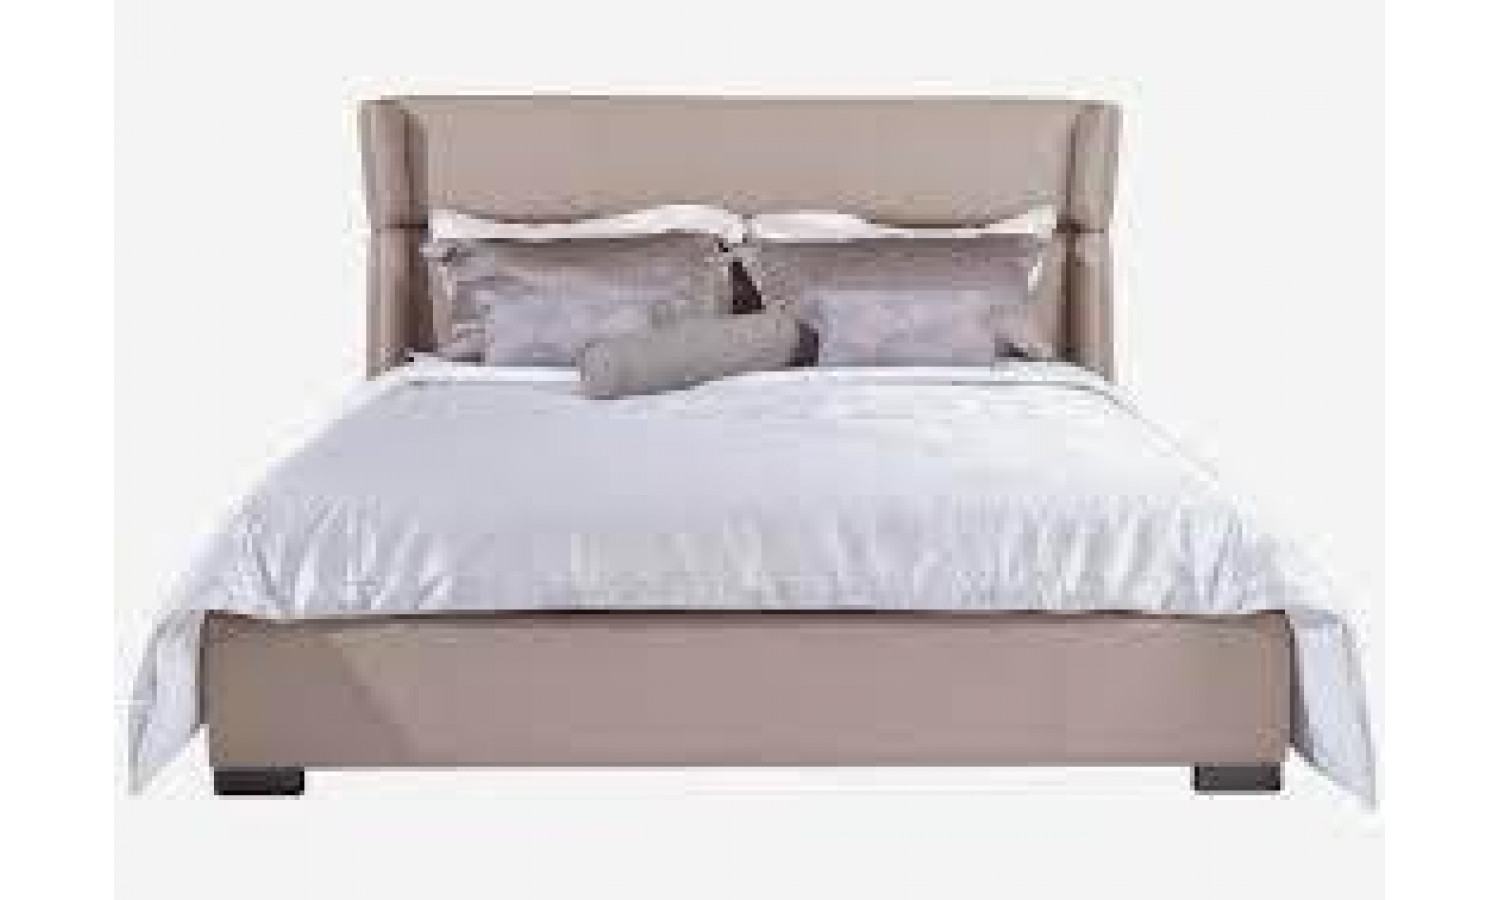 Кровать  MK-8102 двуспальная 180х200 см